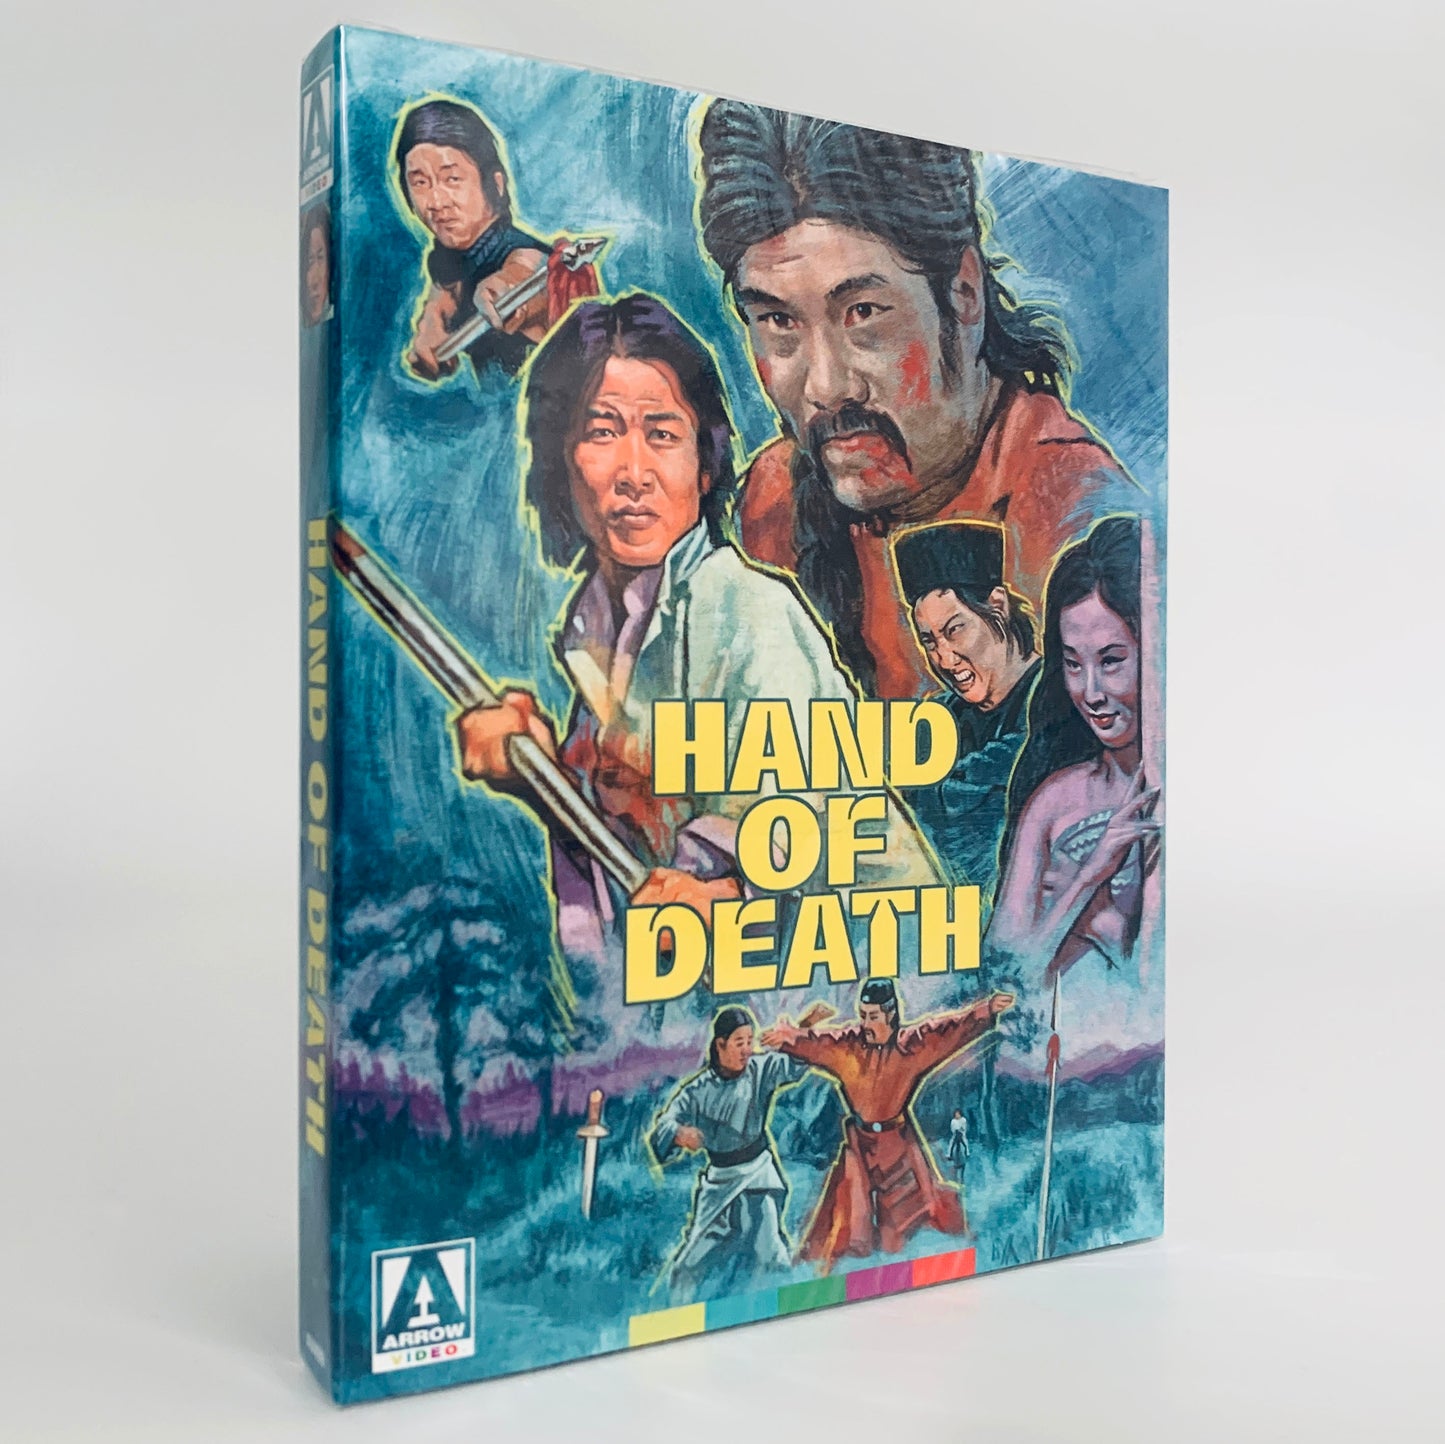 Hand of Death John Woo Jackie Chan Sammo Hung Countdown in Kung Fu Slipcase Limited Blu-ray Arrow